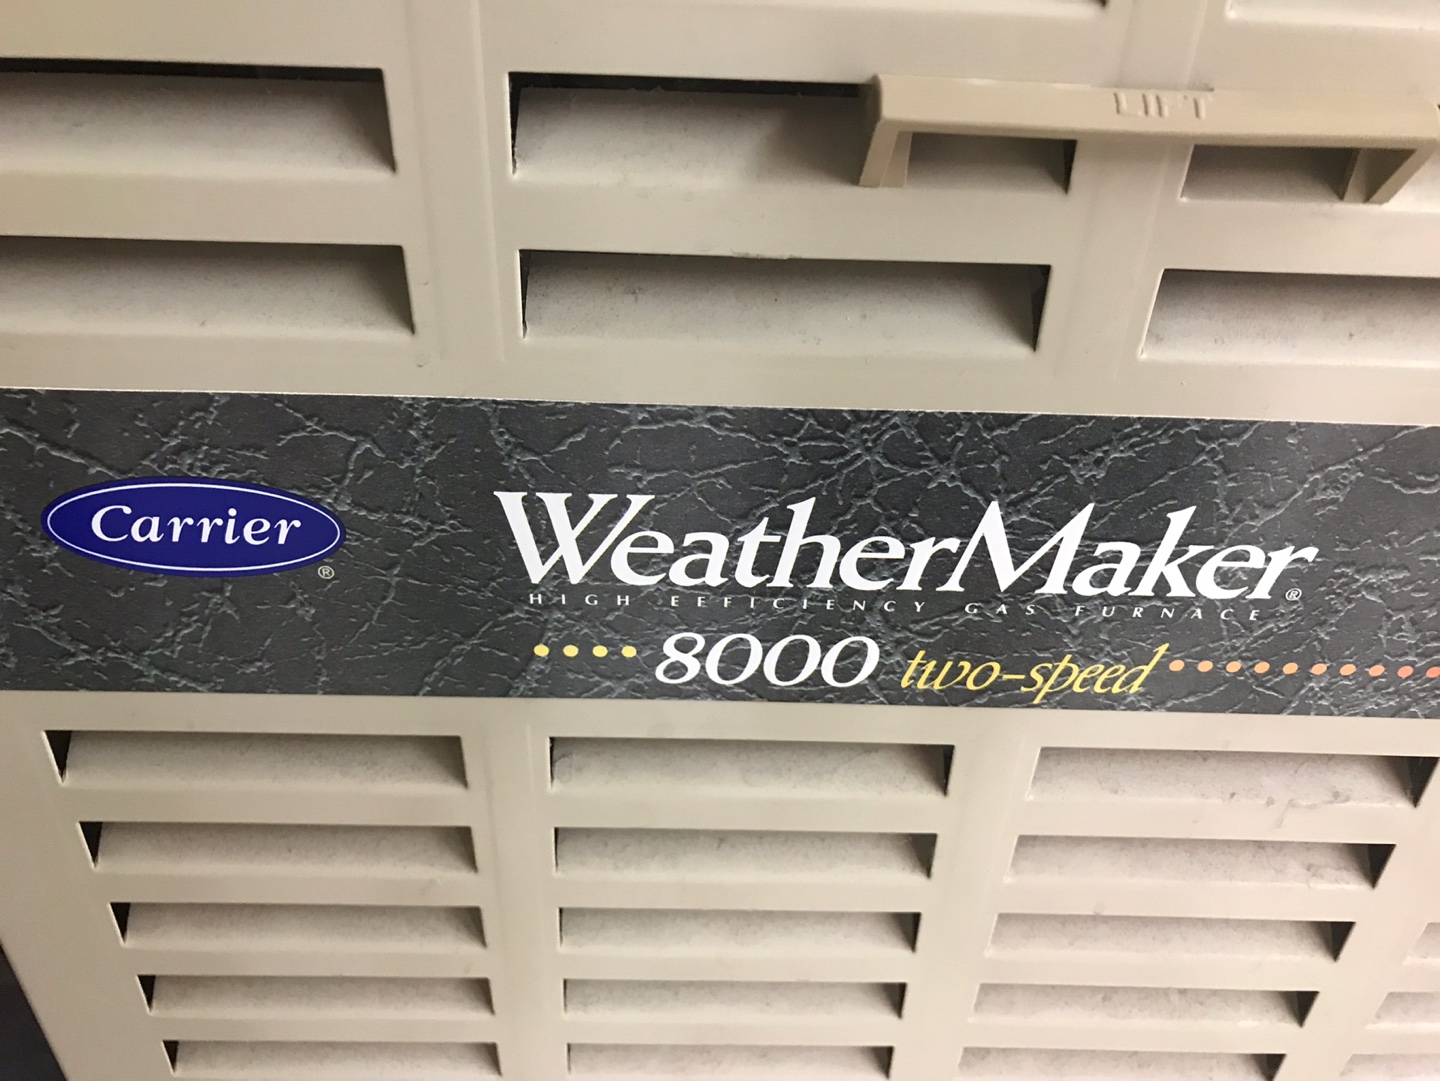 furnace_Carrier WeatherMaker 8000.jpg